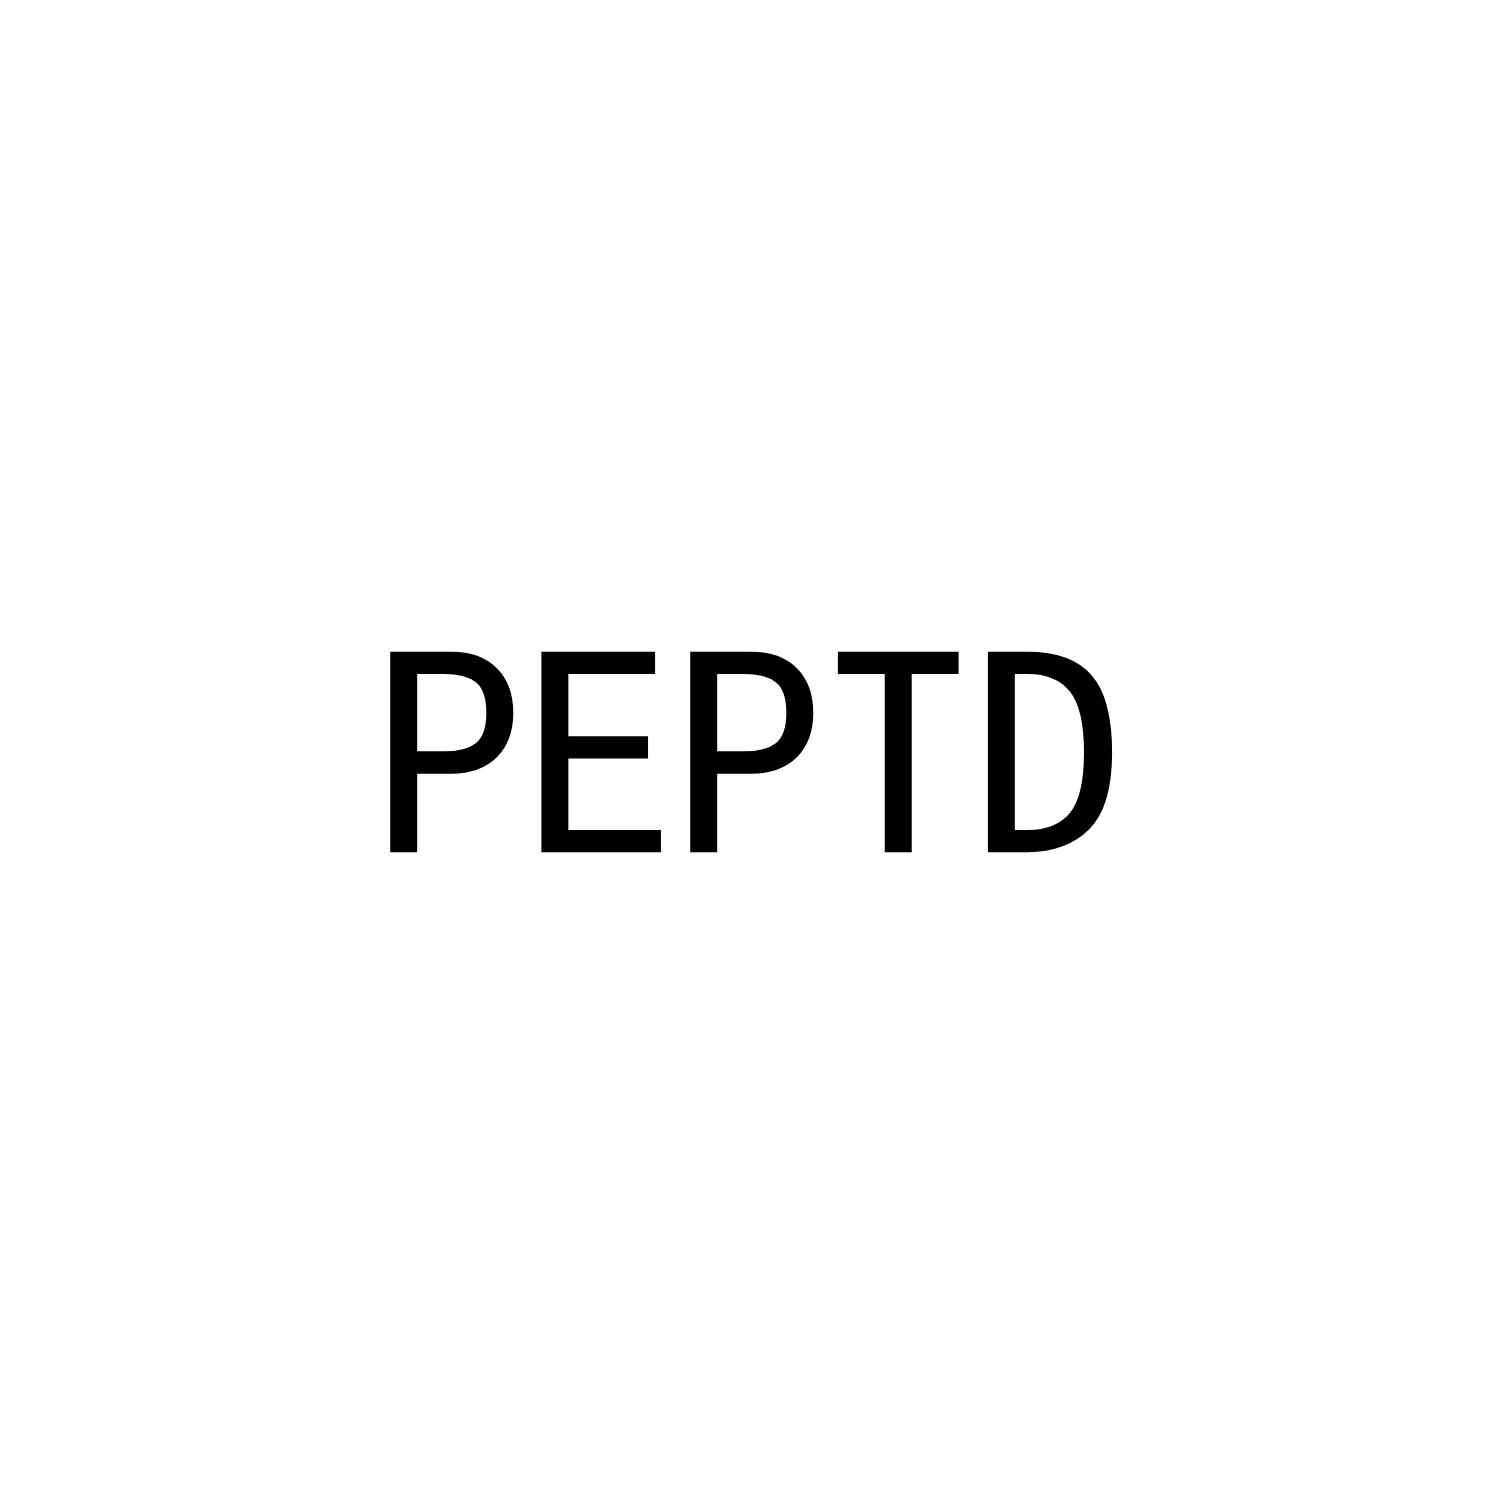 PEPTD